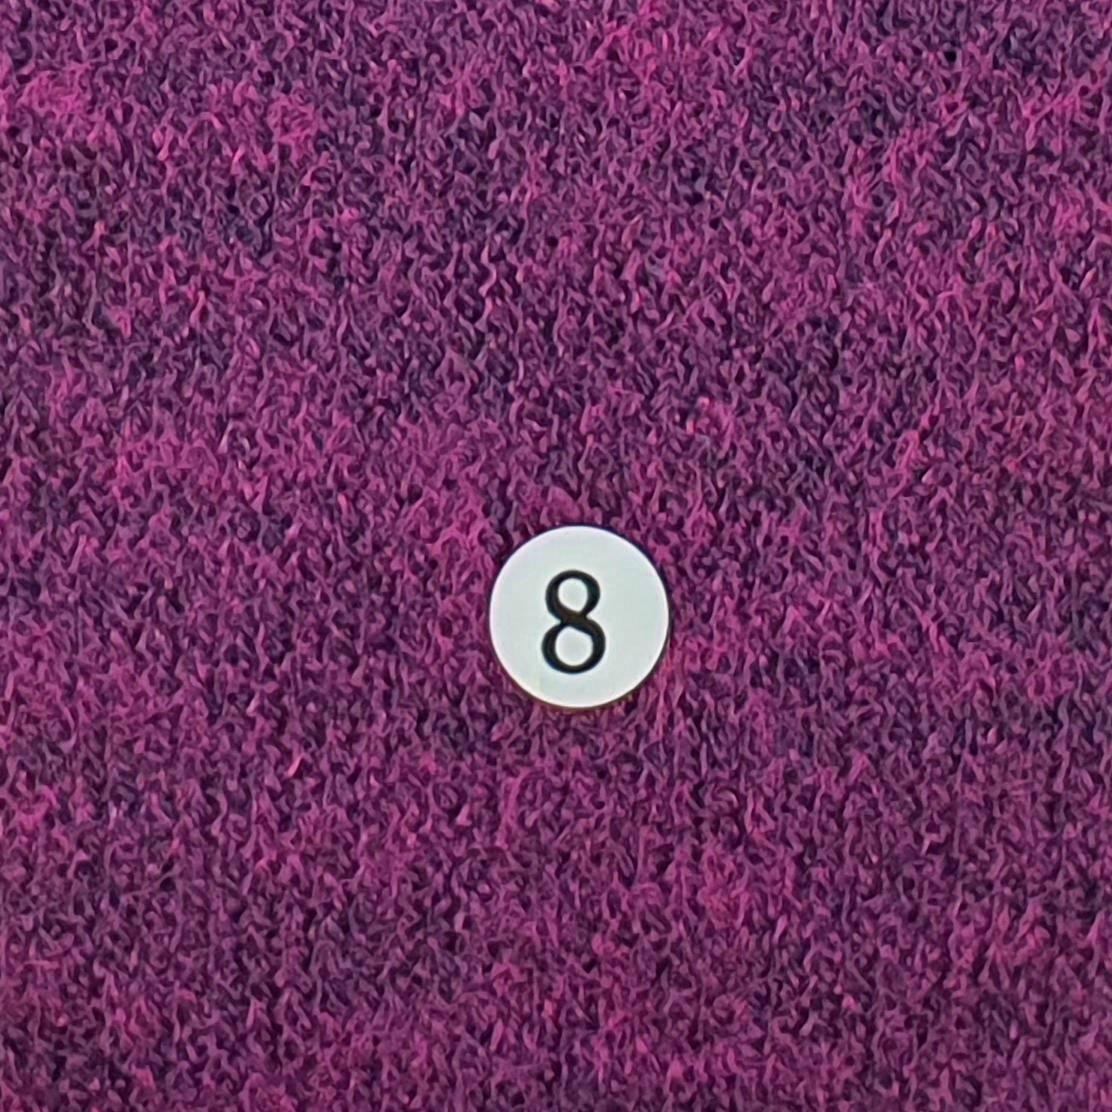 Mango Poly Rayon Fabric | FAB1055 | 1.Fuchsia, 2.Royal/Black, 3.Green/Black, 4.Brick/Black, 5.Yellow/Black, 6.Mustard Yellow, 7.Red, 8.Purple, 9.Khaki, 10.Violet by Fabricis.com #